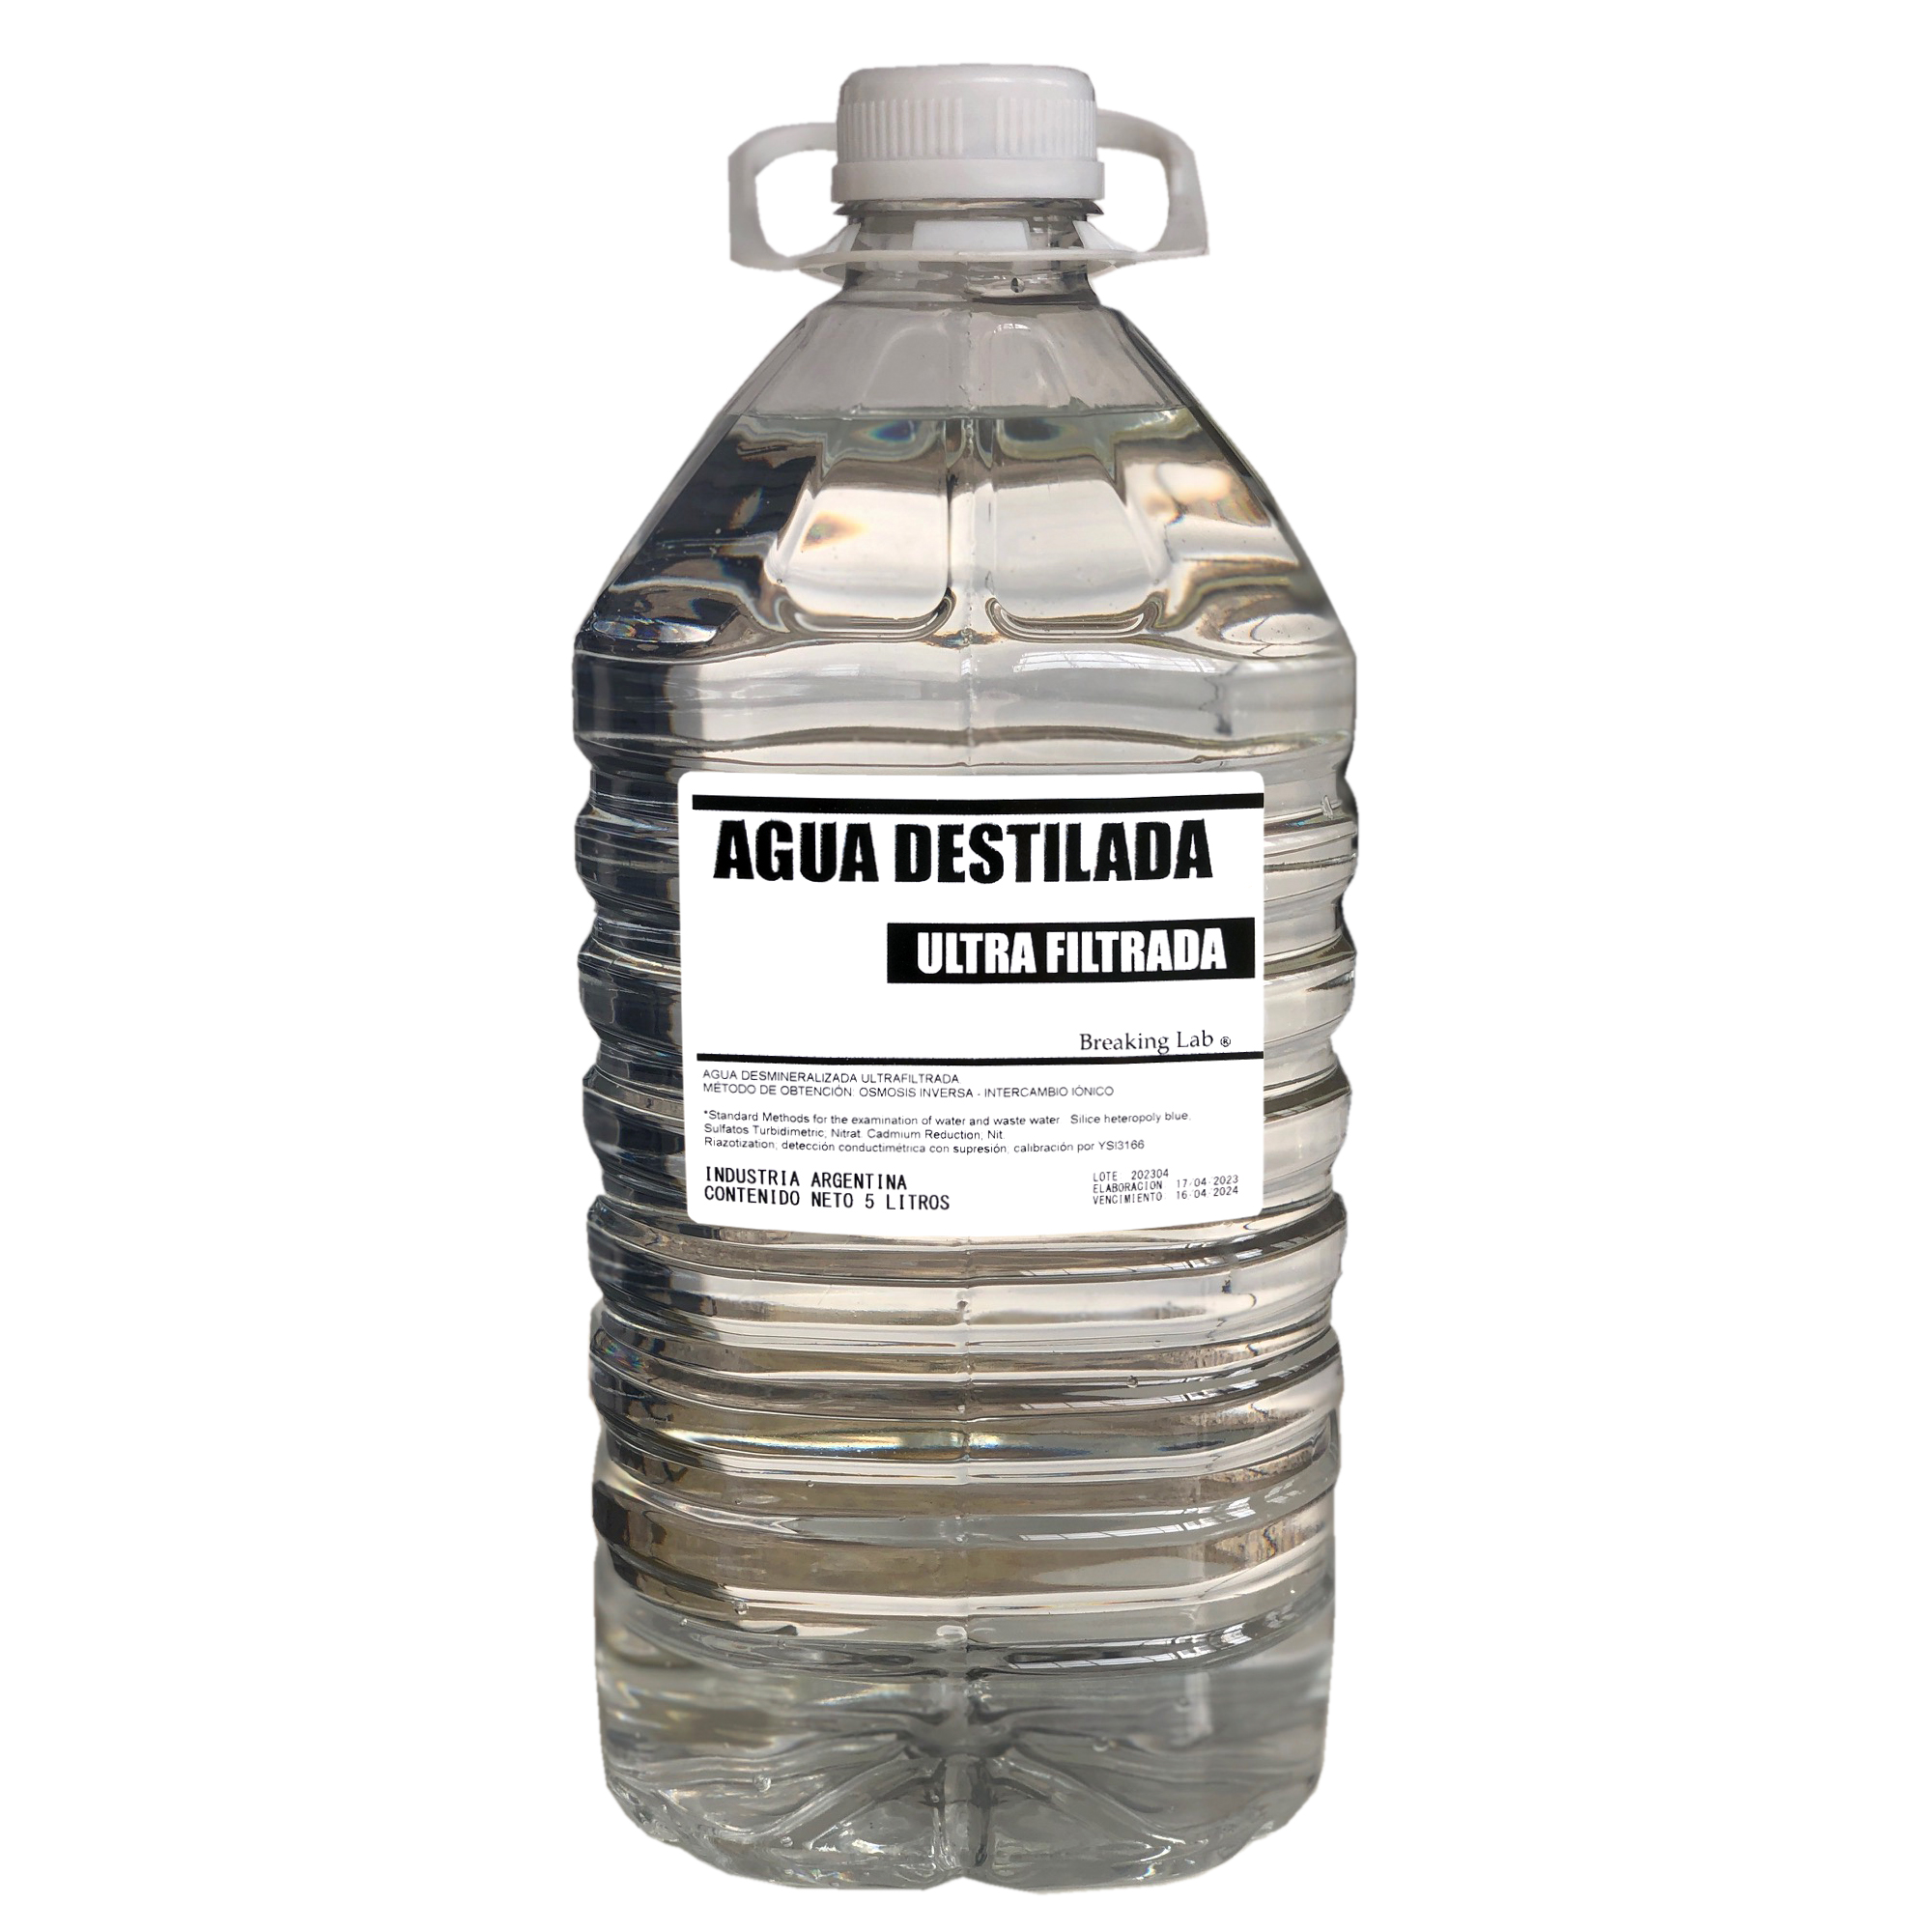 Agua destilada